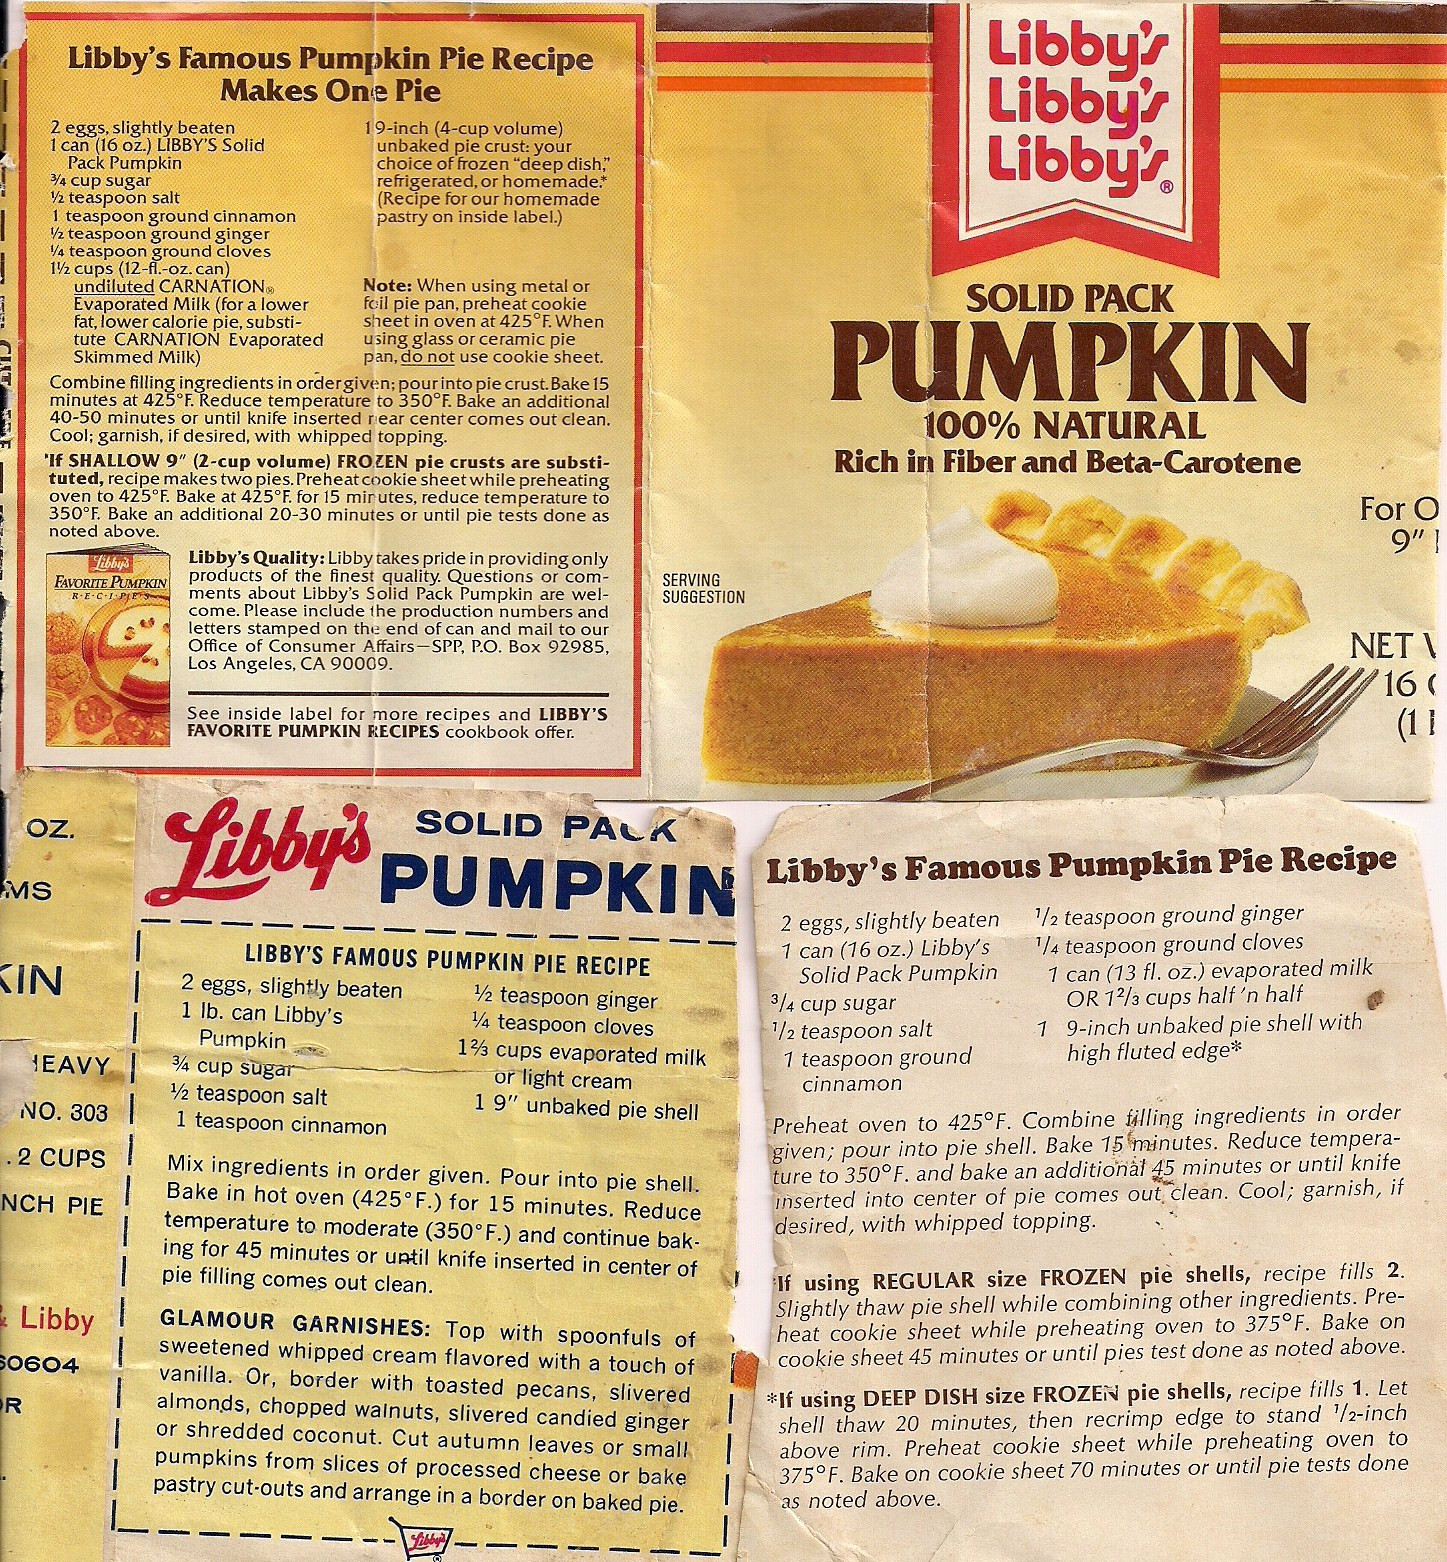 Libbys Pumpkin Pie Recipe
 Grandma’s “Secret” Pumpkin Pie Recipe